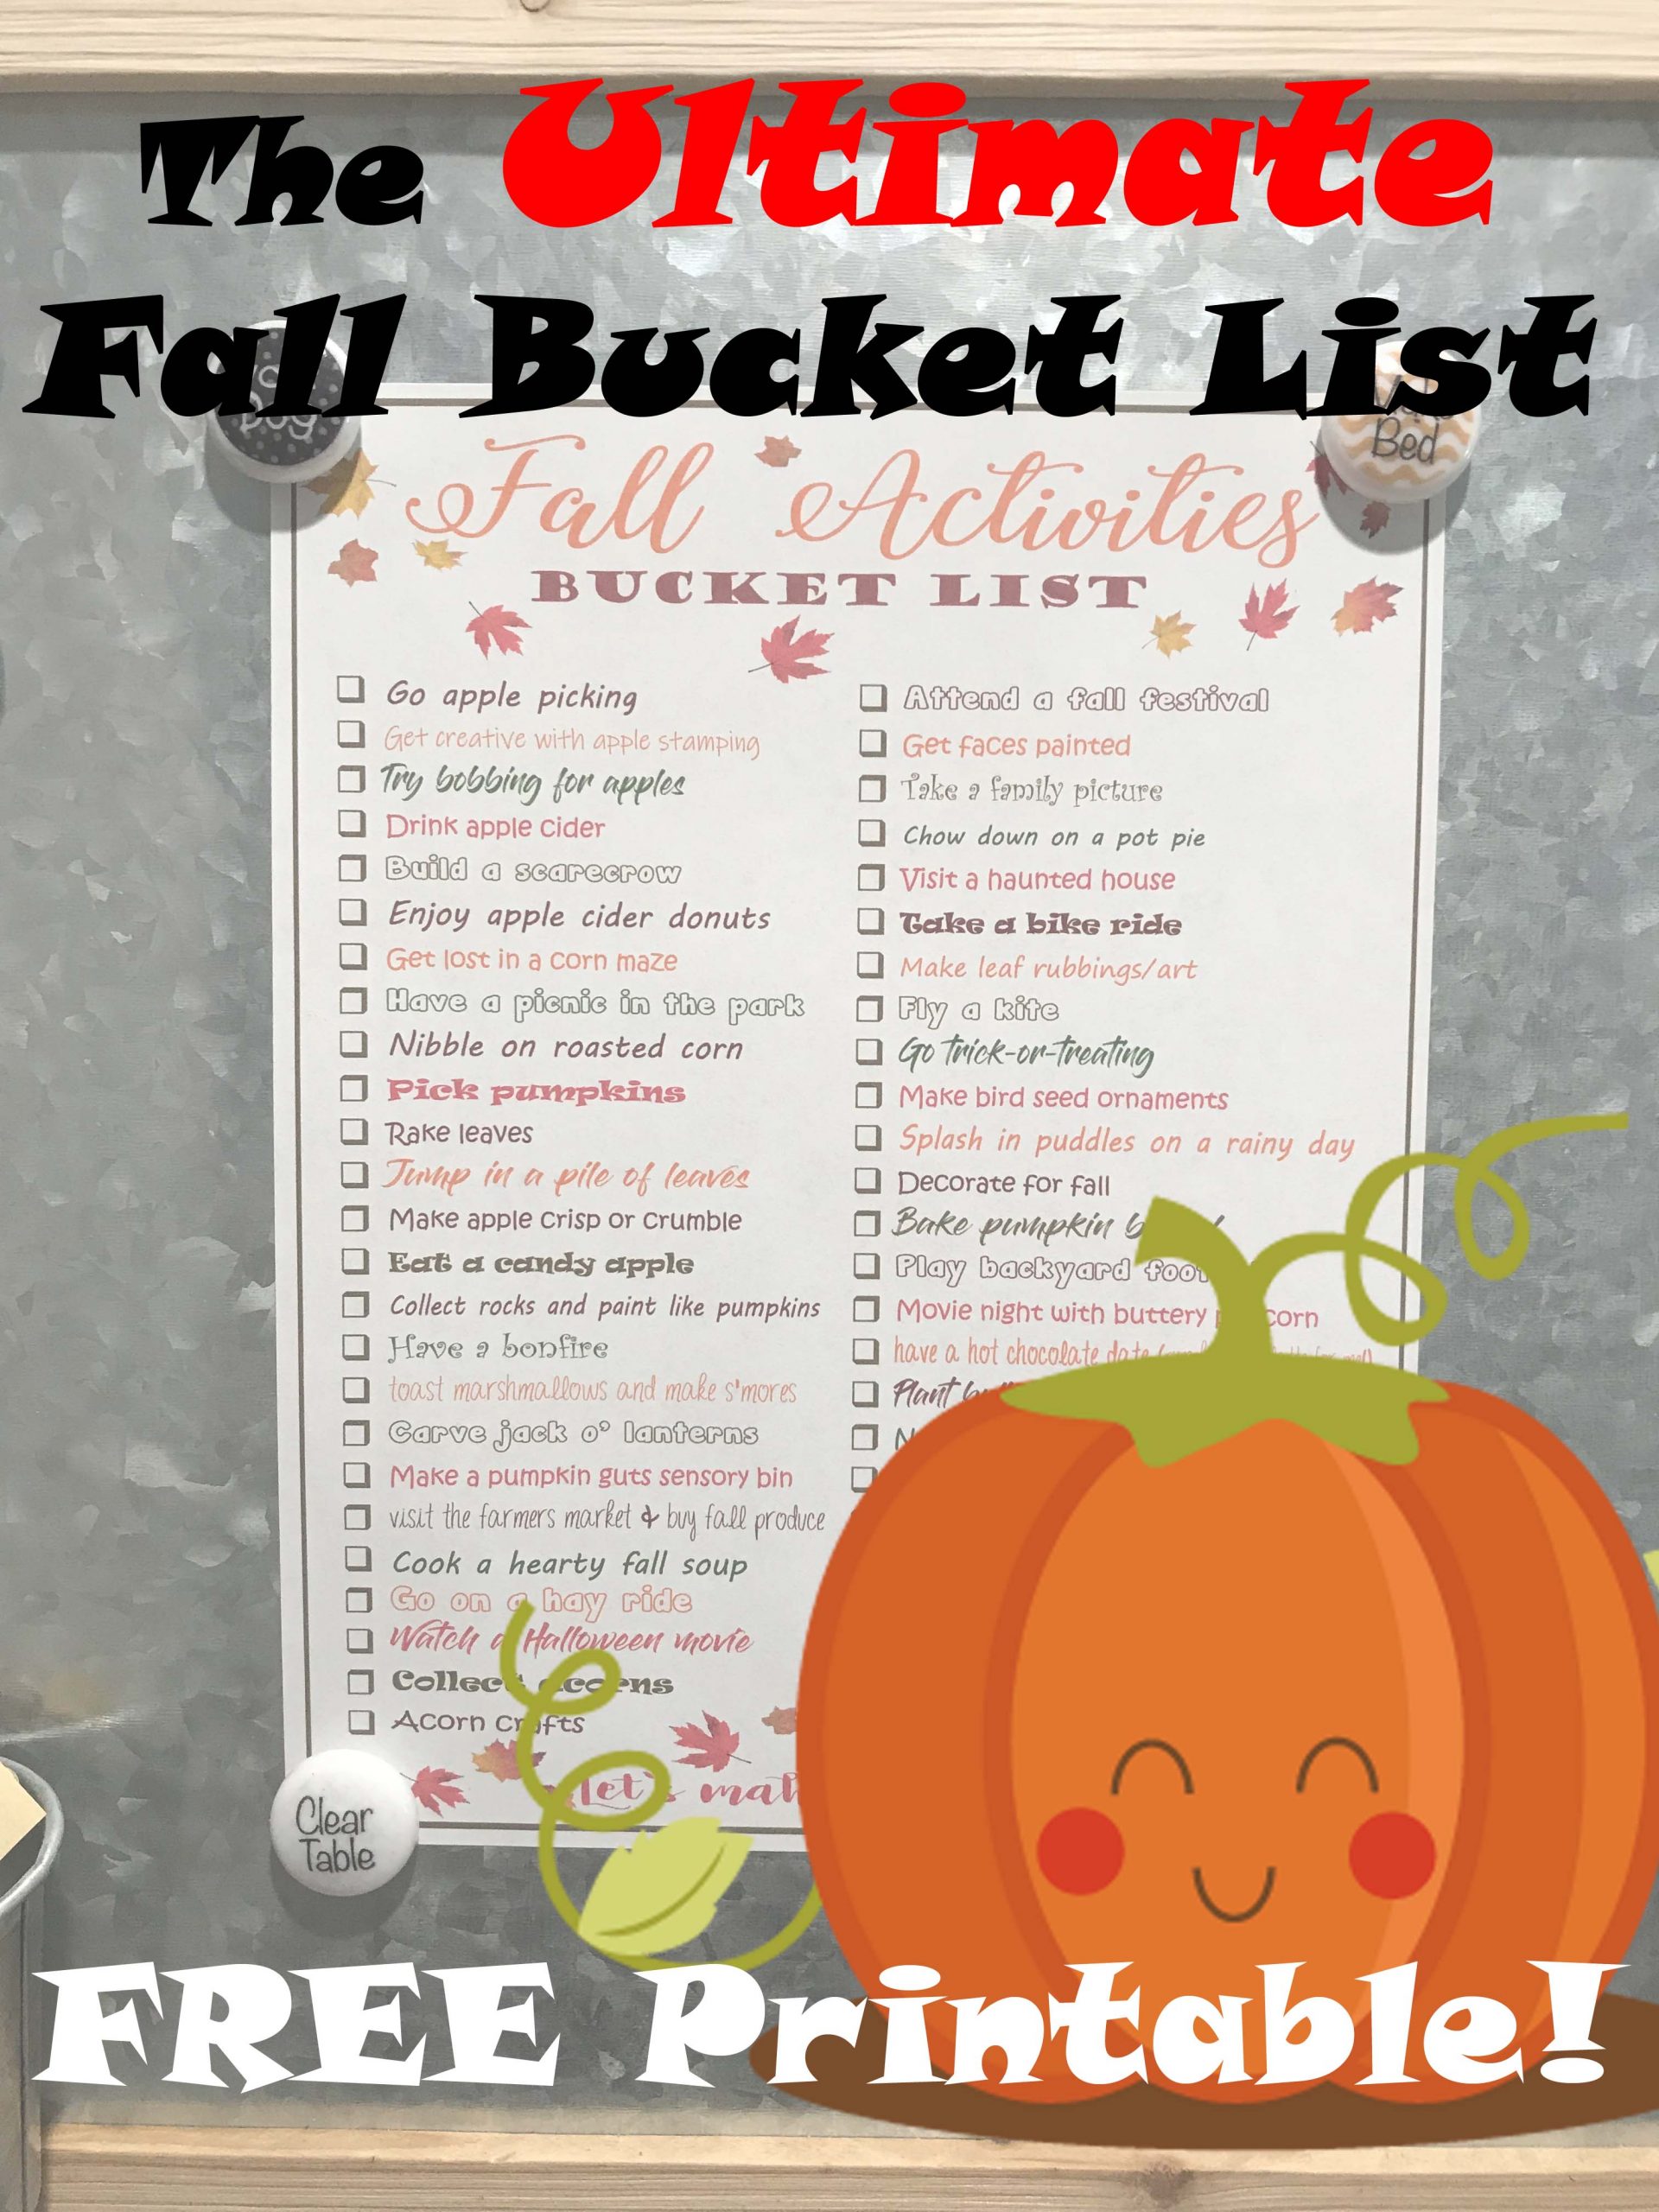 Free Printable – Ultimate Fall Bucket List!